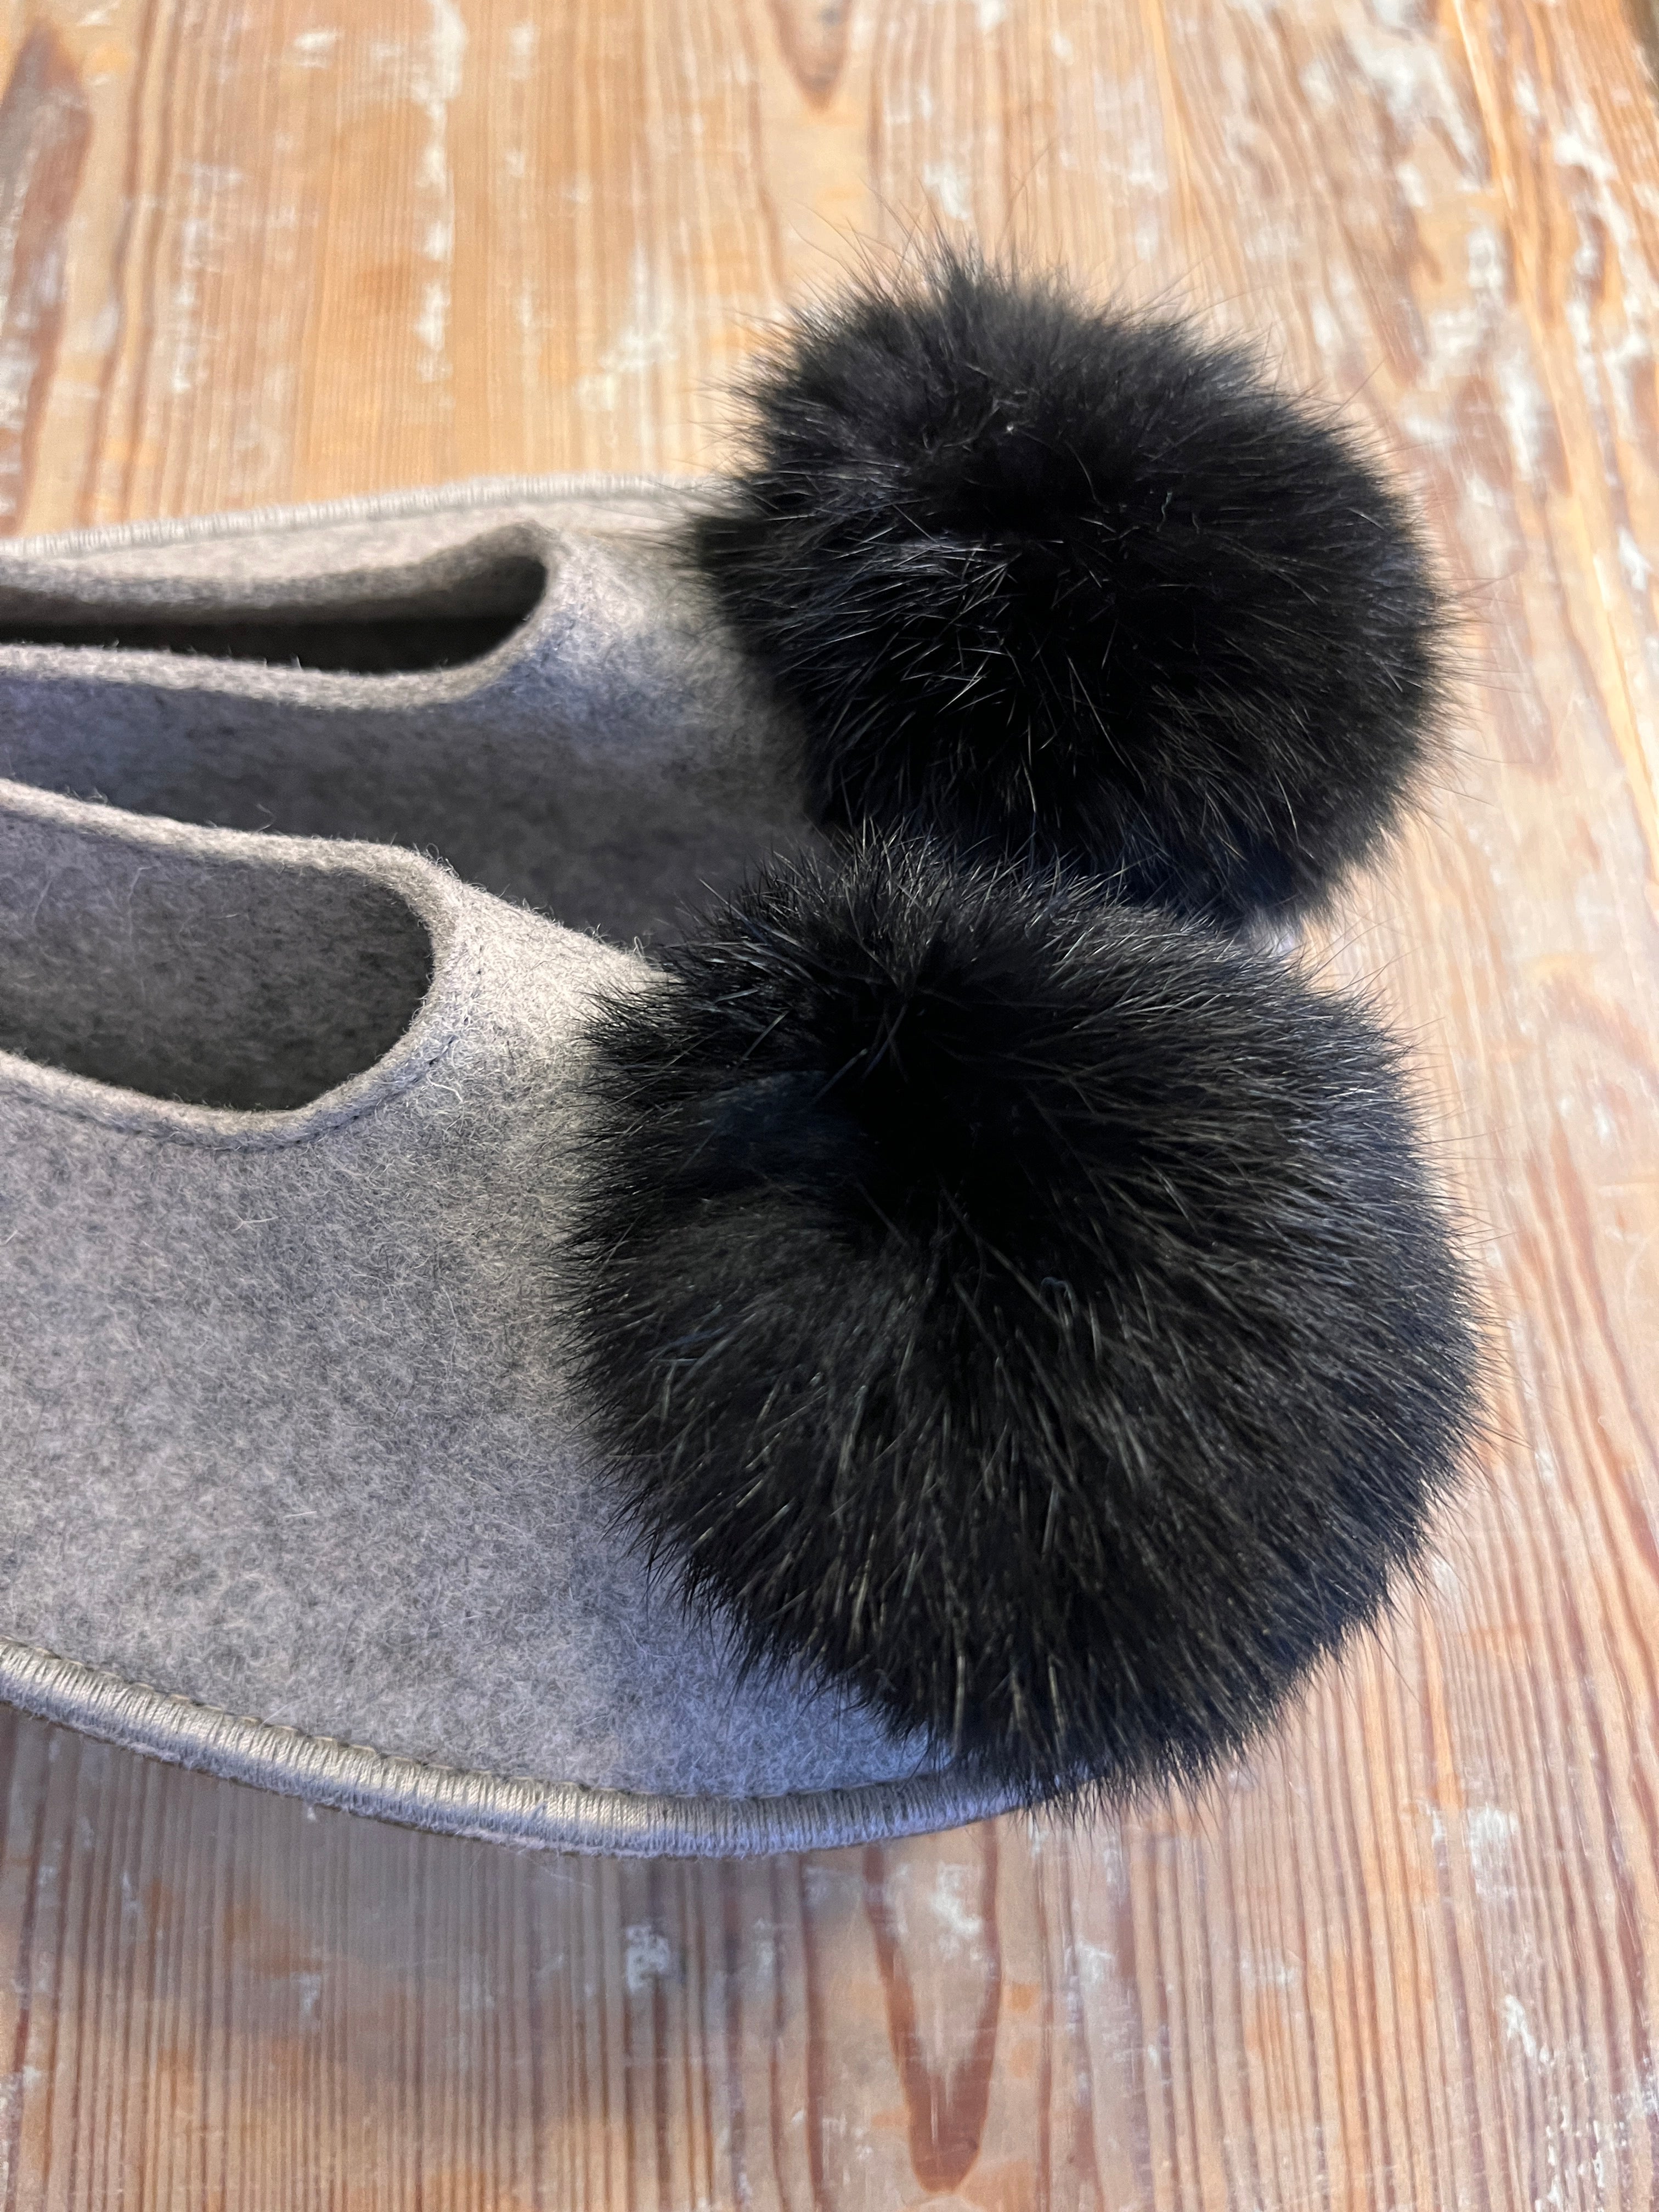 GREY&BLACK slippers